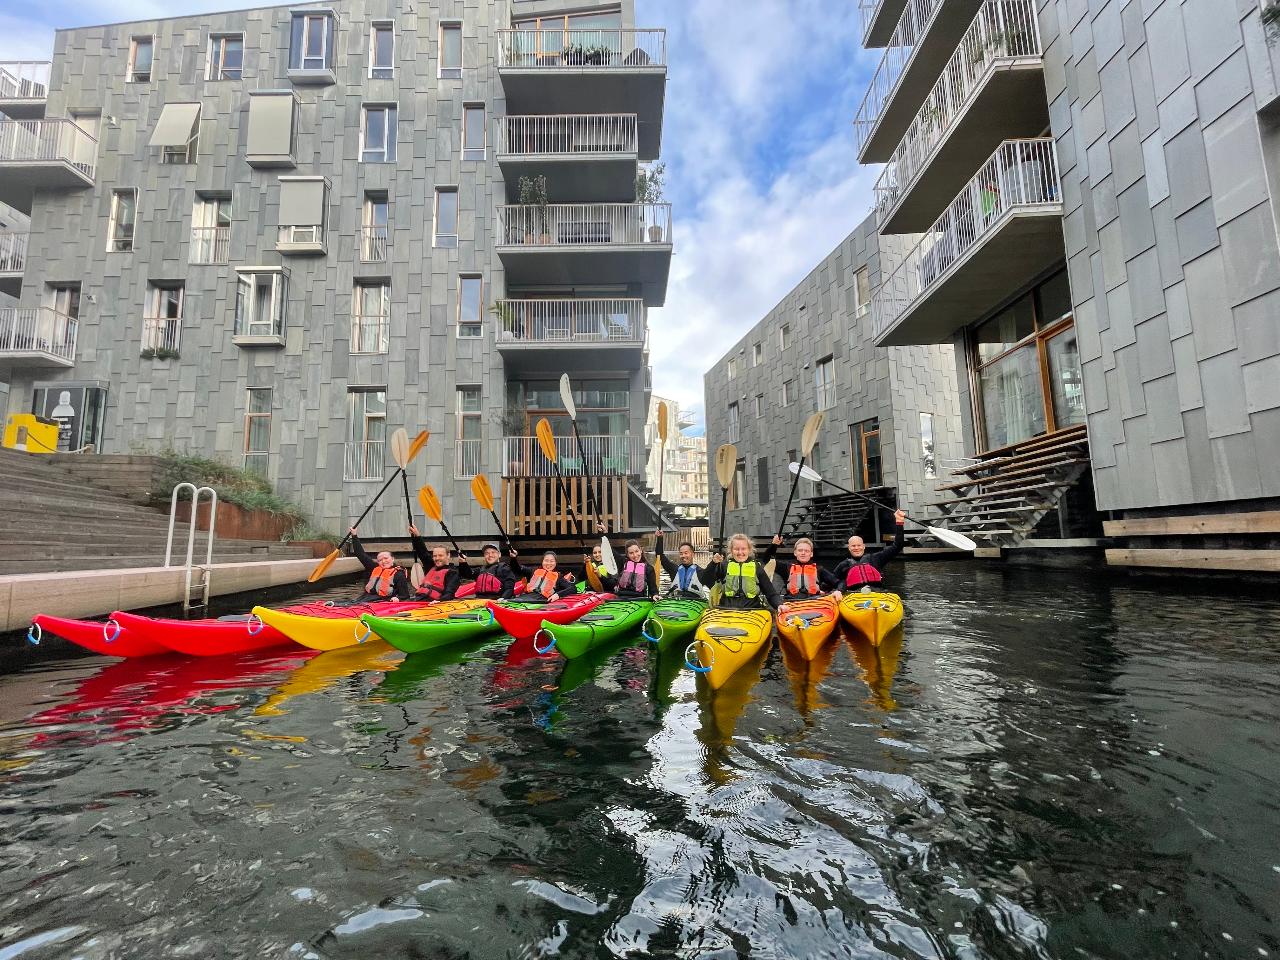 3hr Våttkort Introduction to Sea Kayaking Course (introkurs) – Bjørvika, Oslo